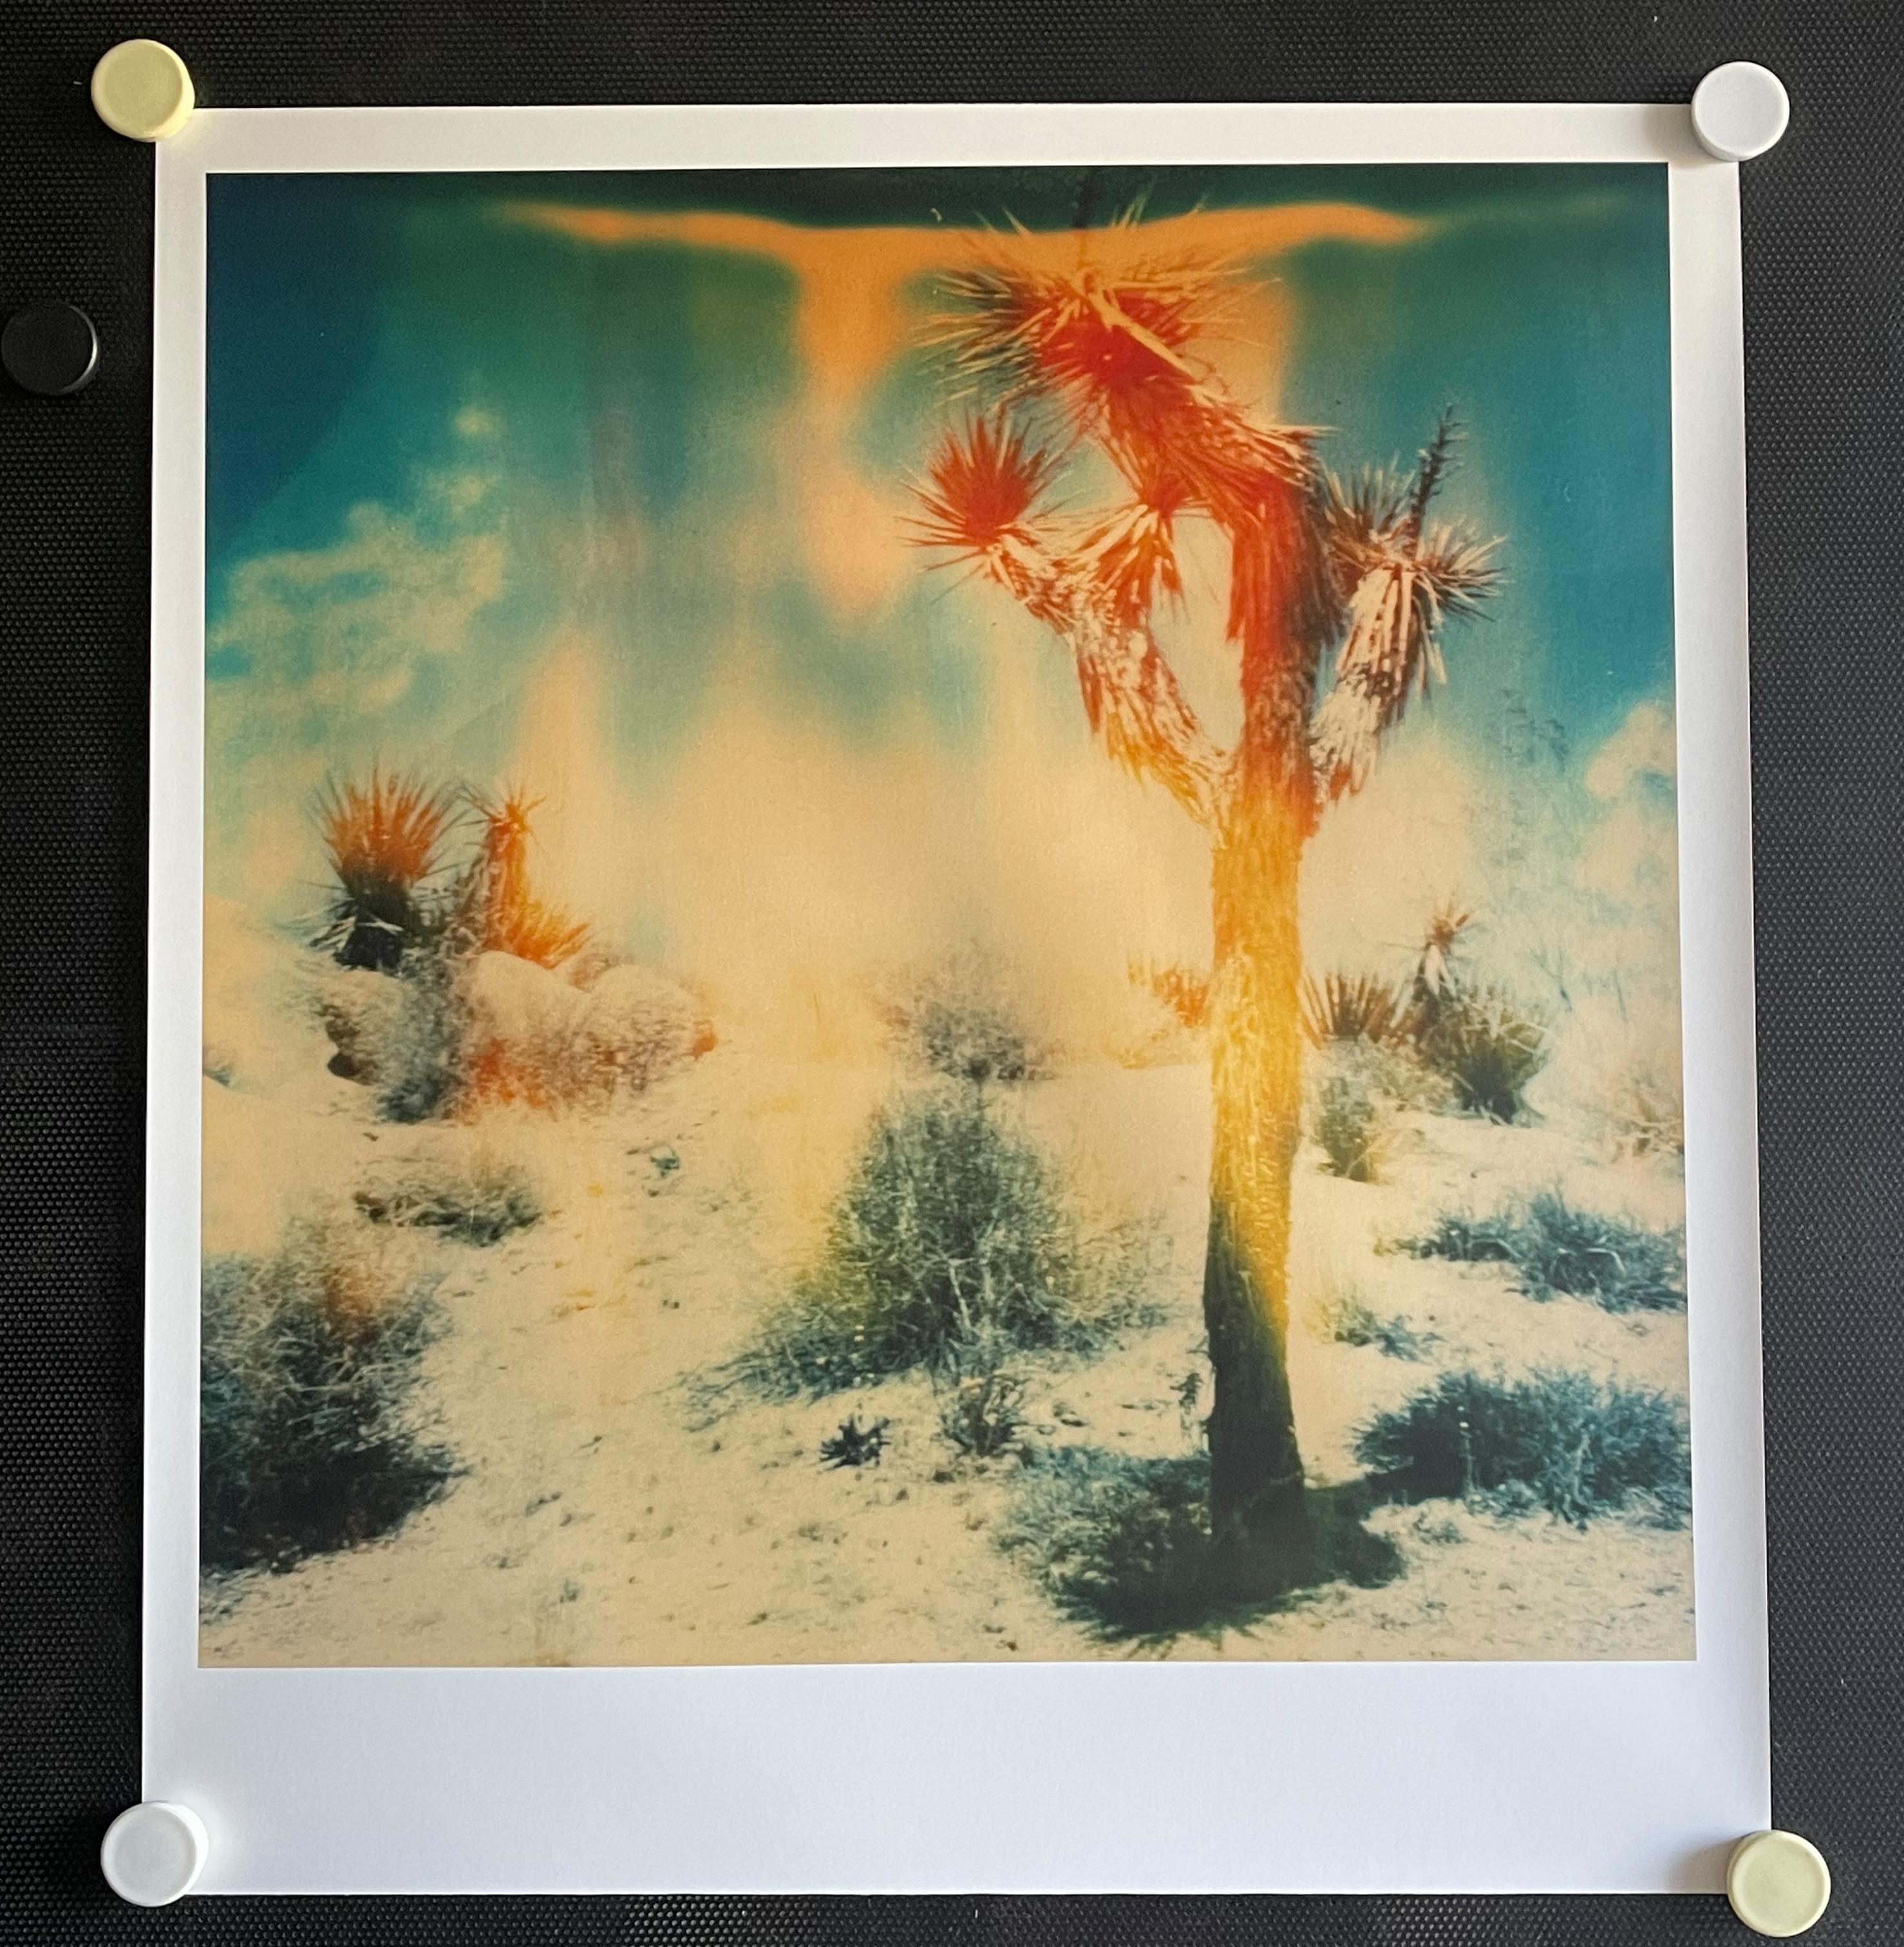 Buried - Contemporary, Landscape, Figurative, expired, Polaroid, analog